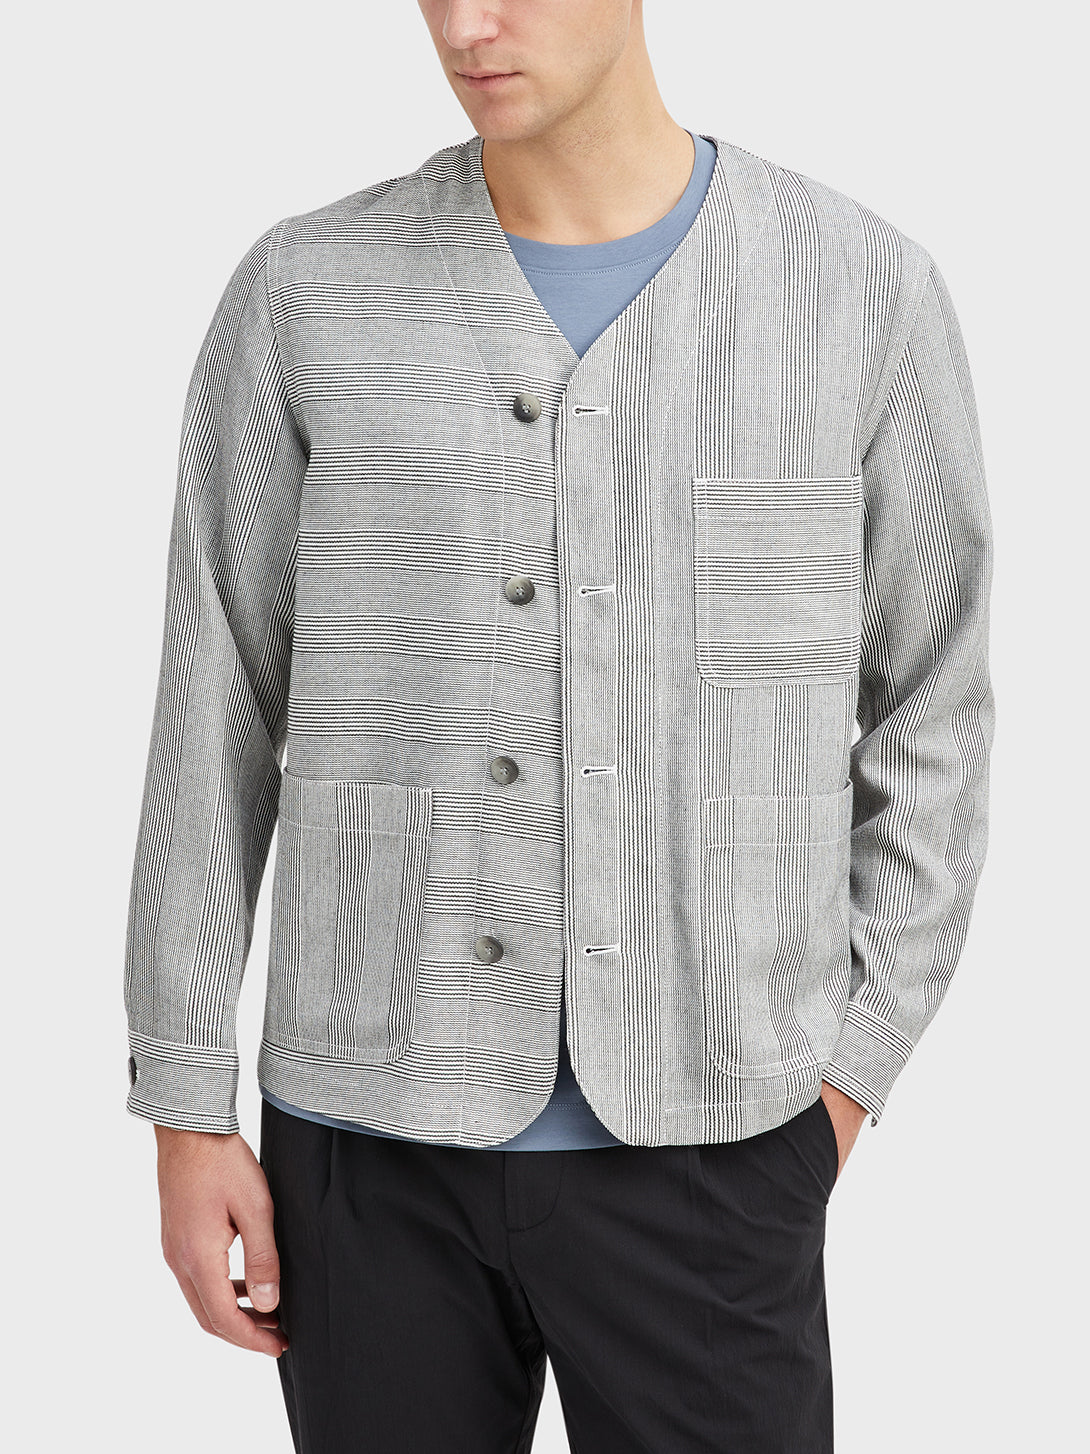 Black&White S Fiske Stripe Jacket Men’s wool jackets ONS Clothing